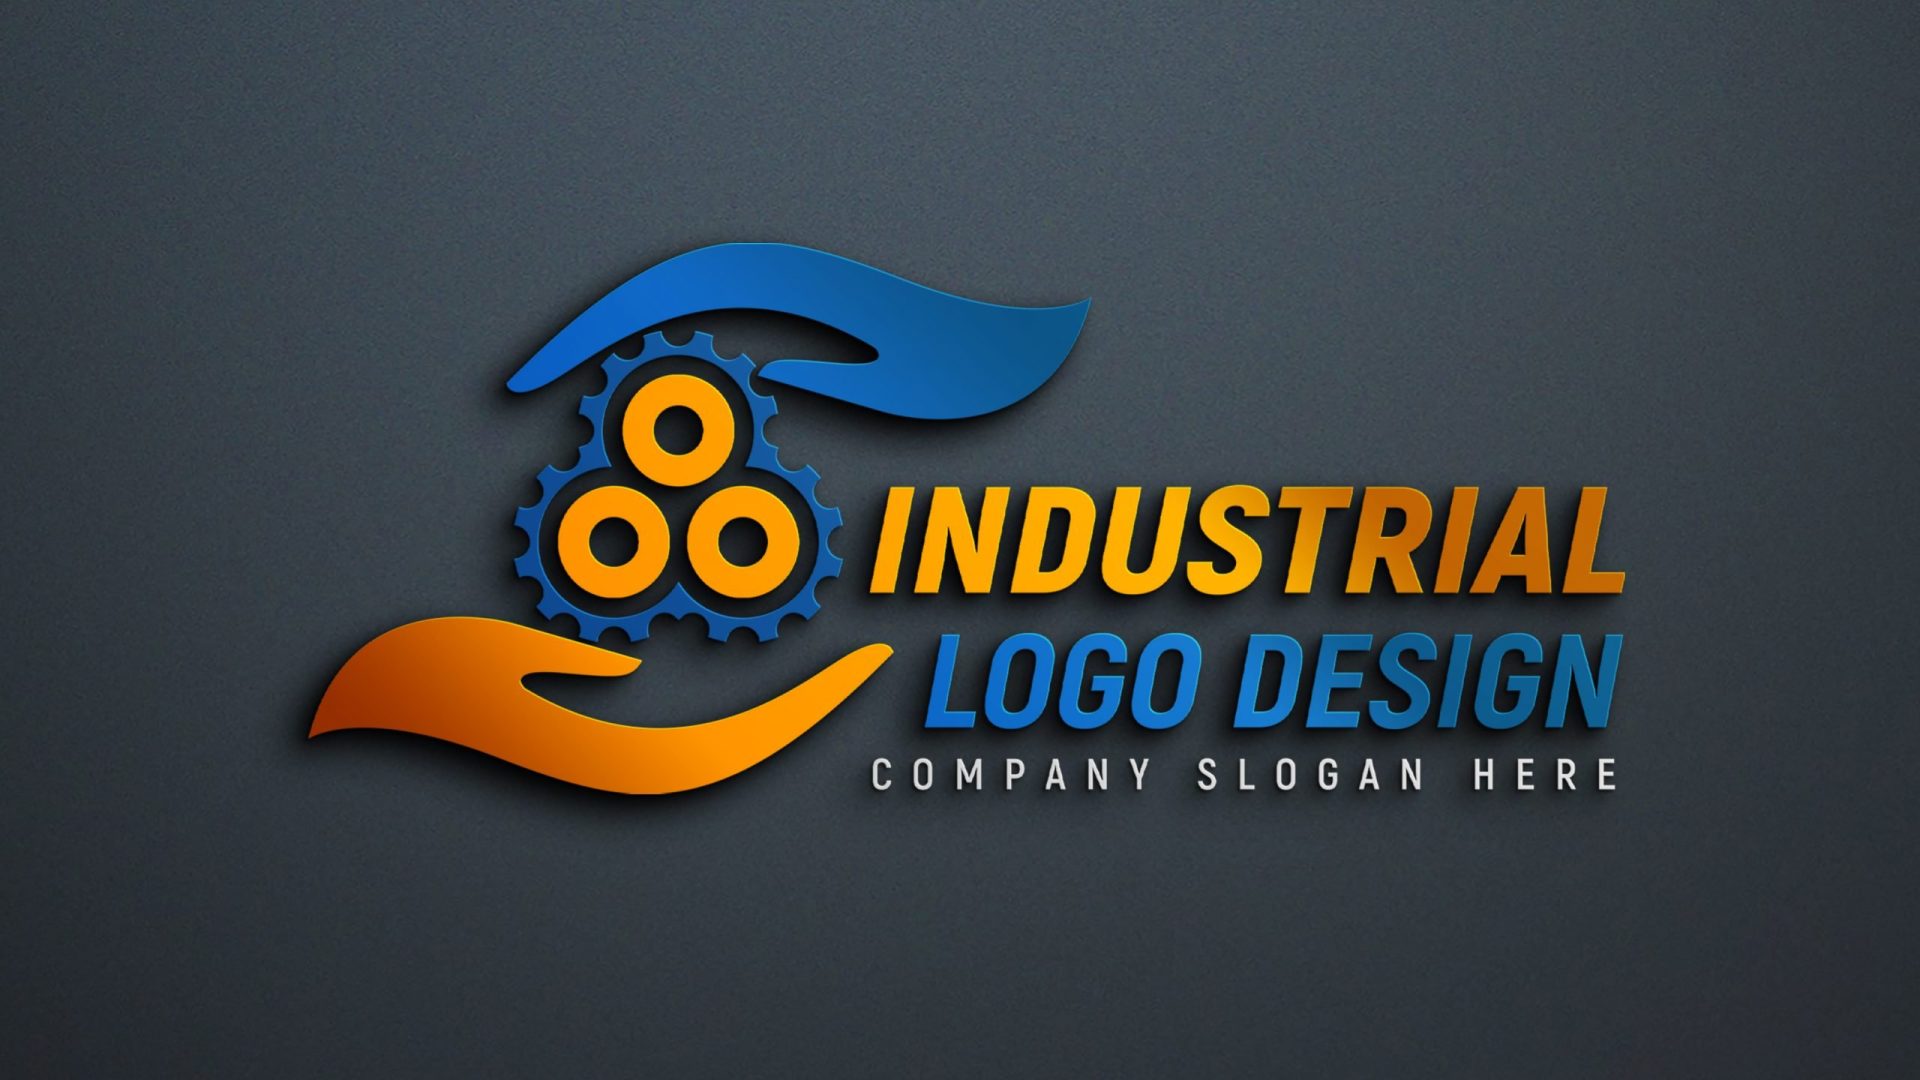 industrial logo ideas 2